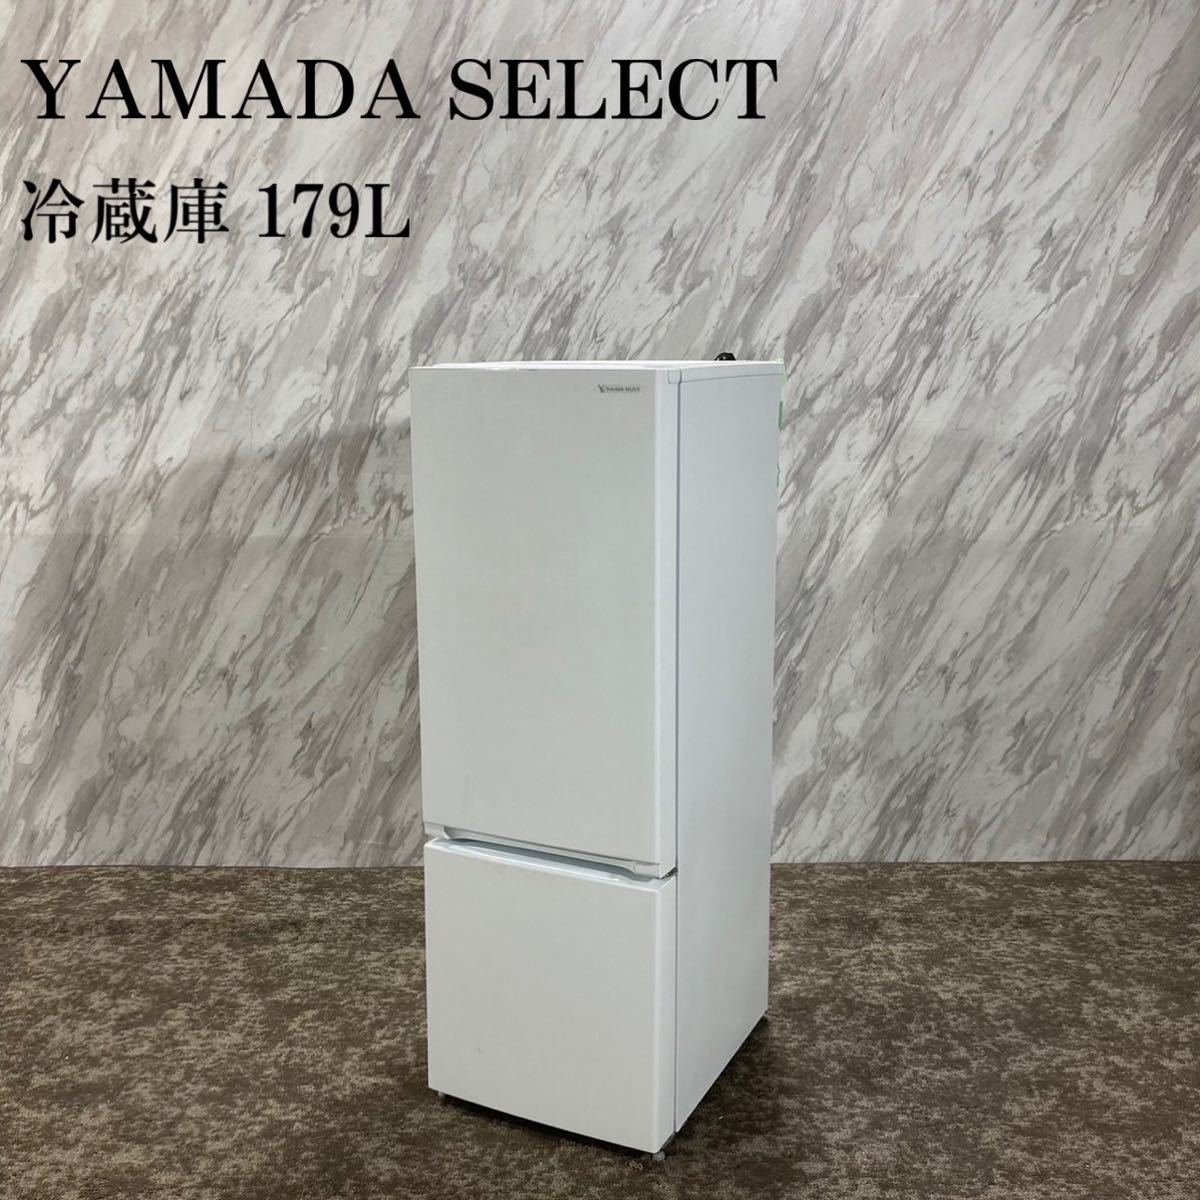 AL完売しました。 YAMADASELECT 冷蔵庫 YRZ-F17H1 179L 家電 E604 aci 